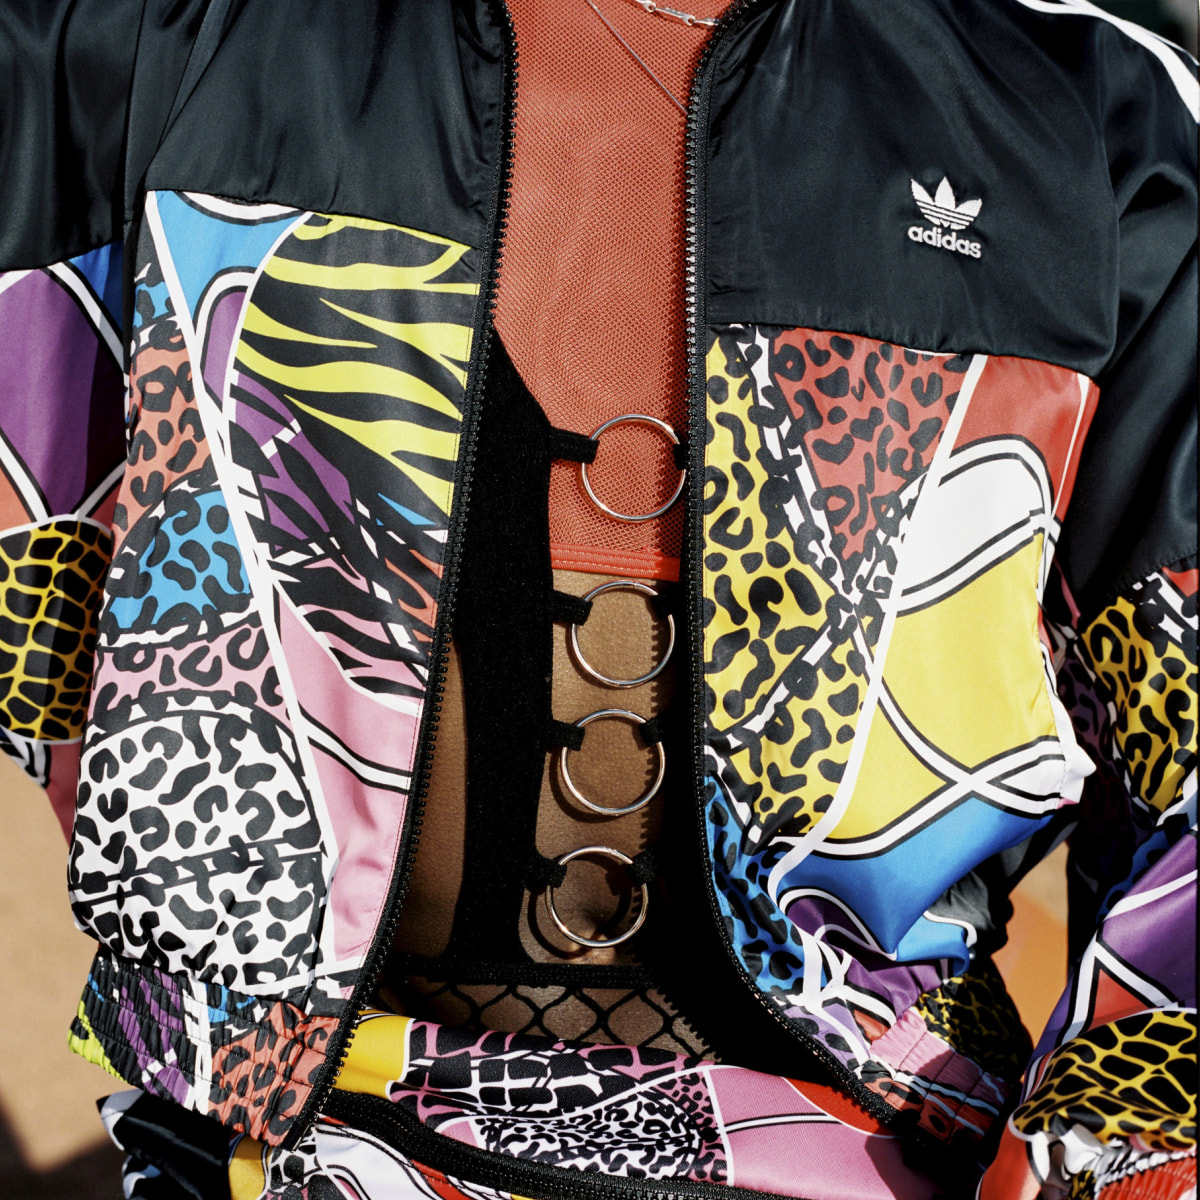 Adidas Rich Mnisi Track Jacket. 11